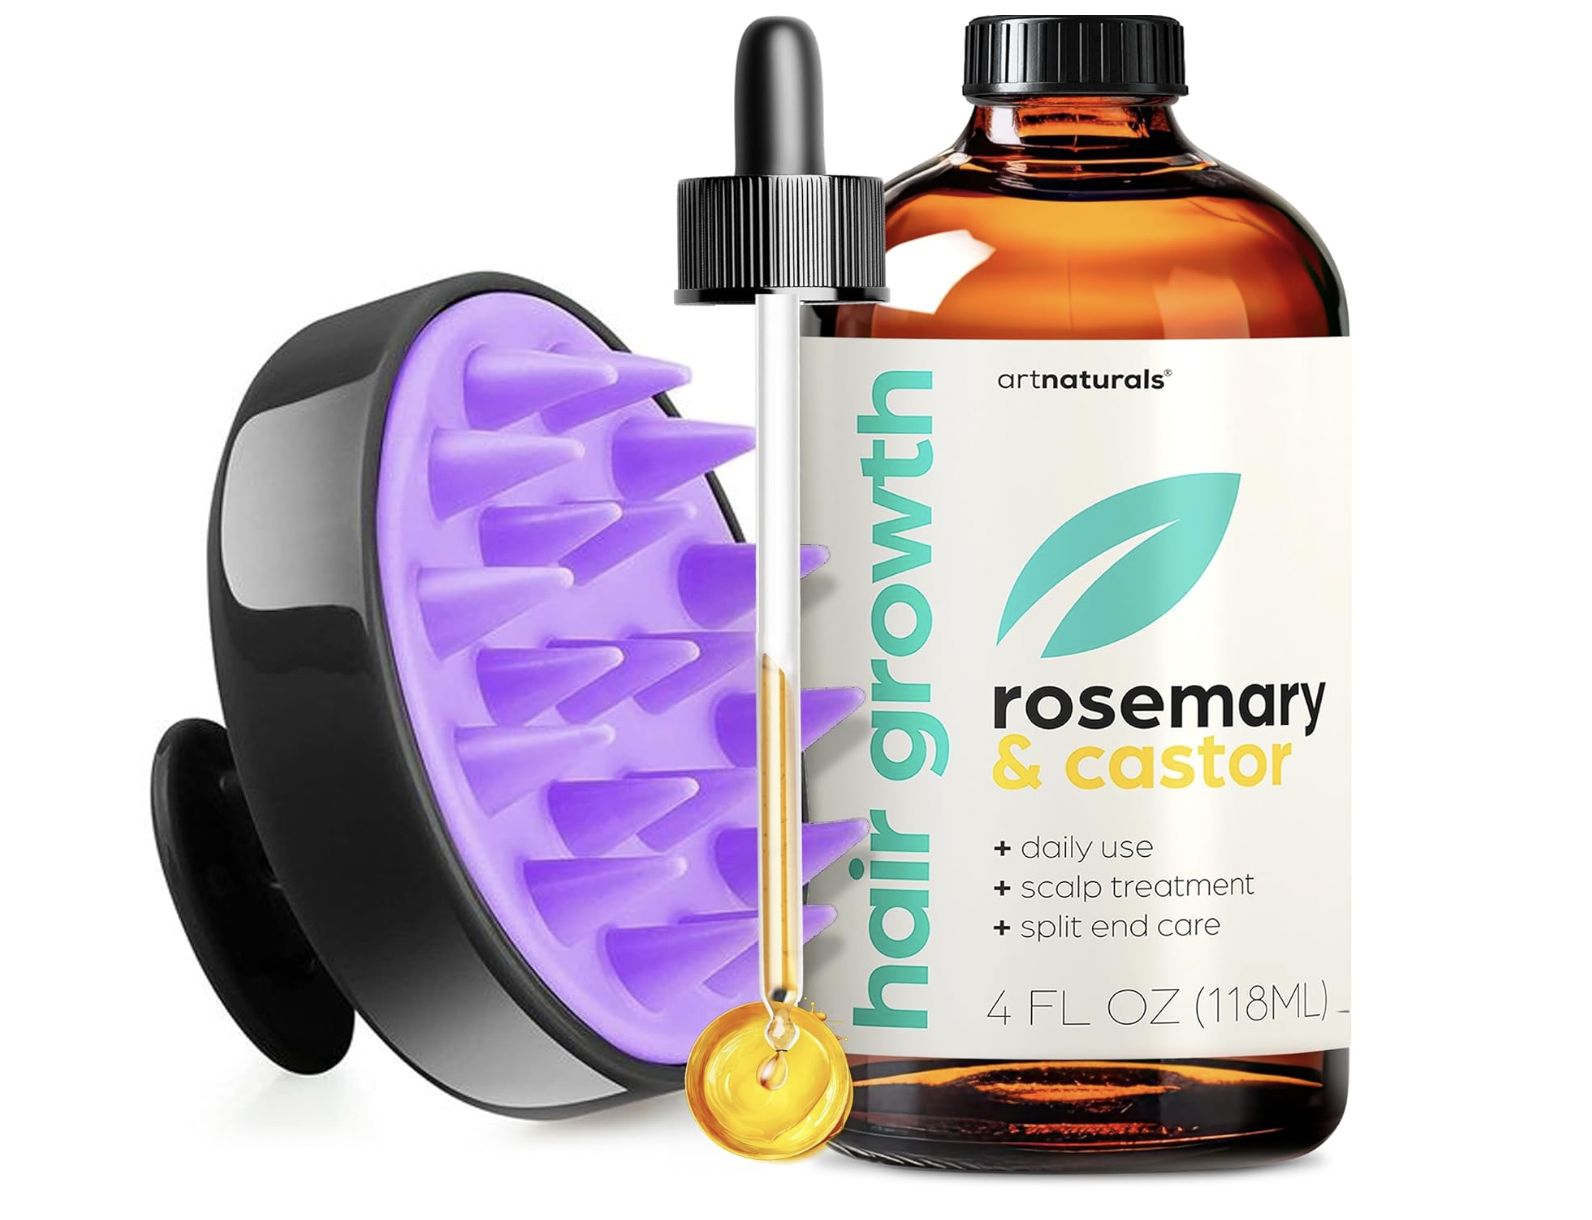 Artnaturals Rosemary and castor oil hair serum